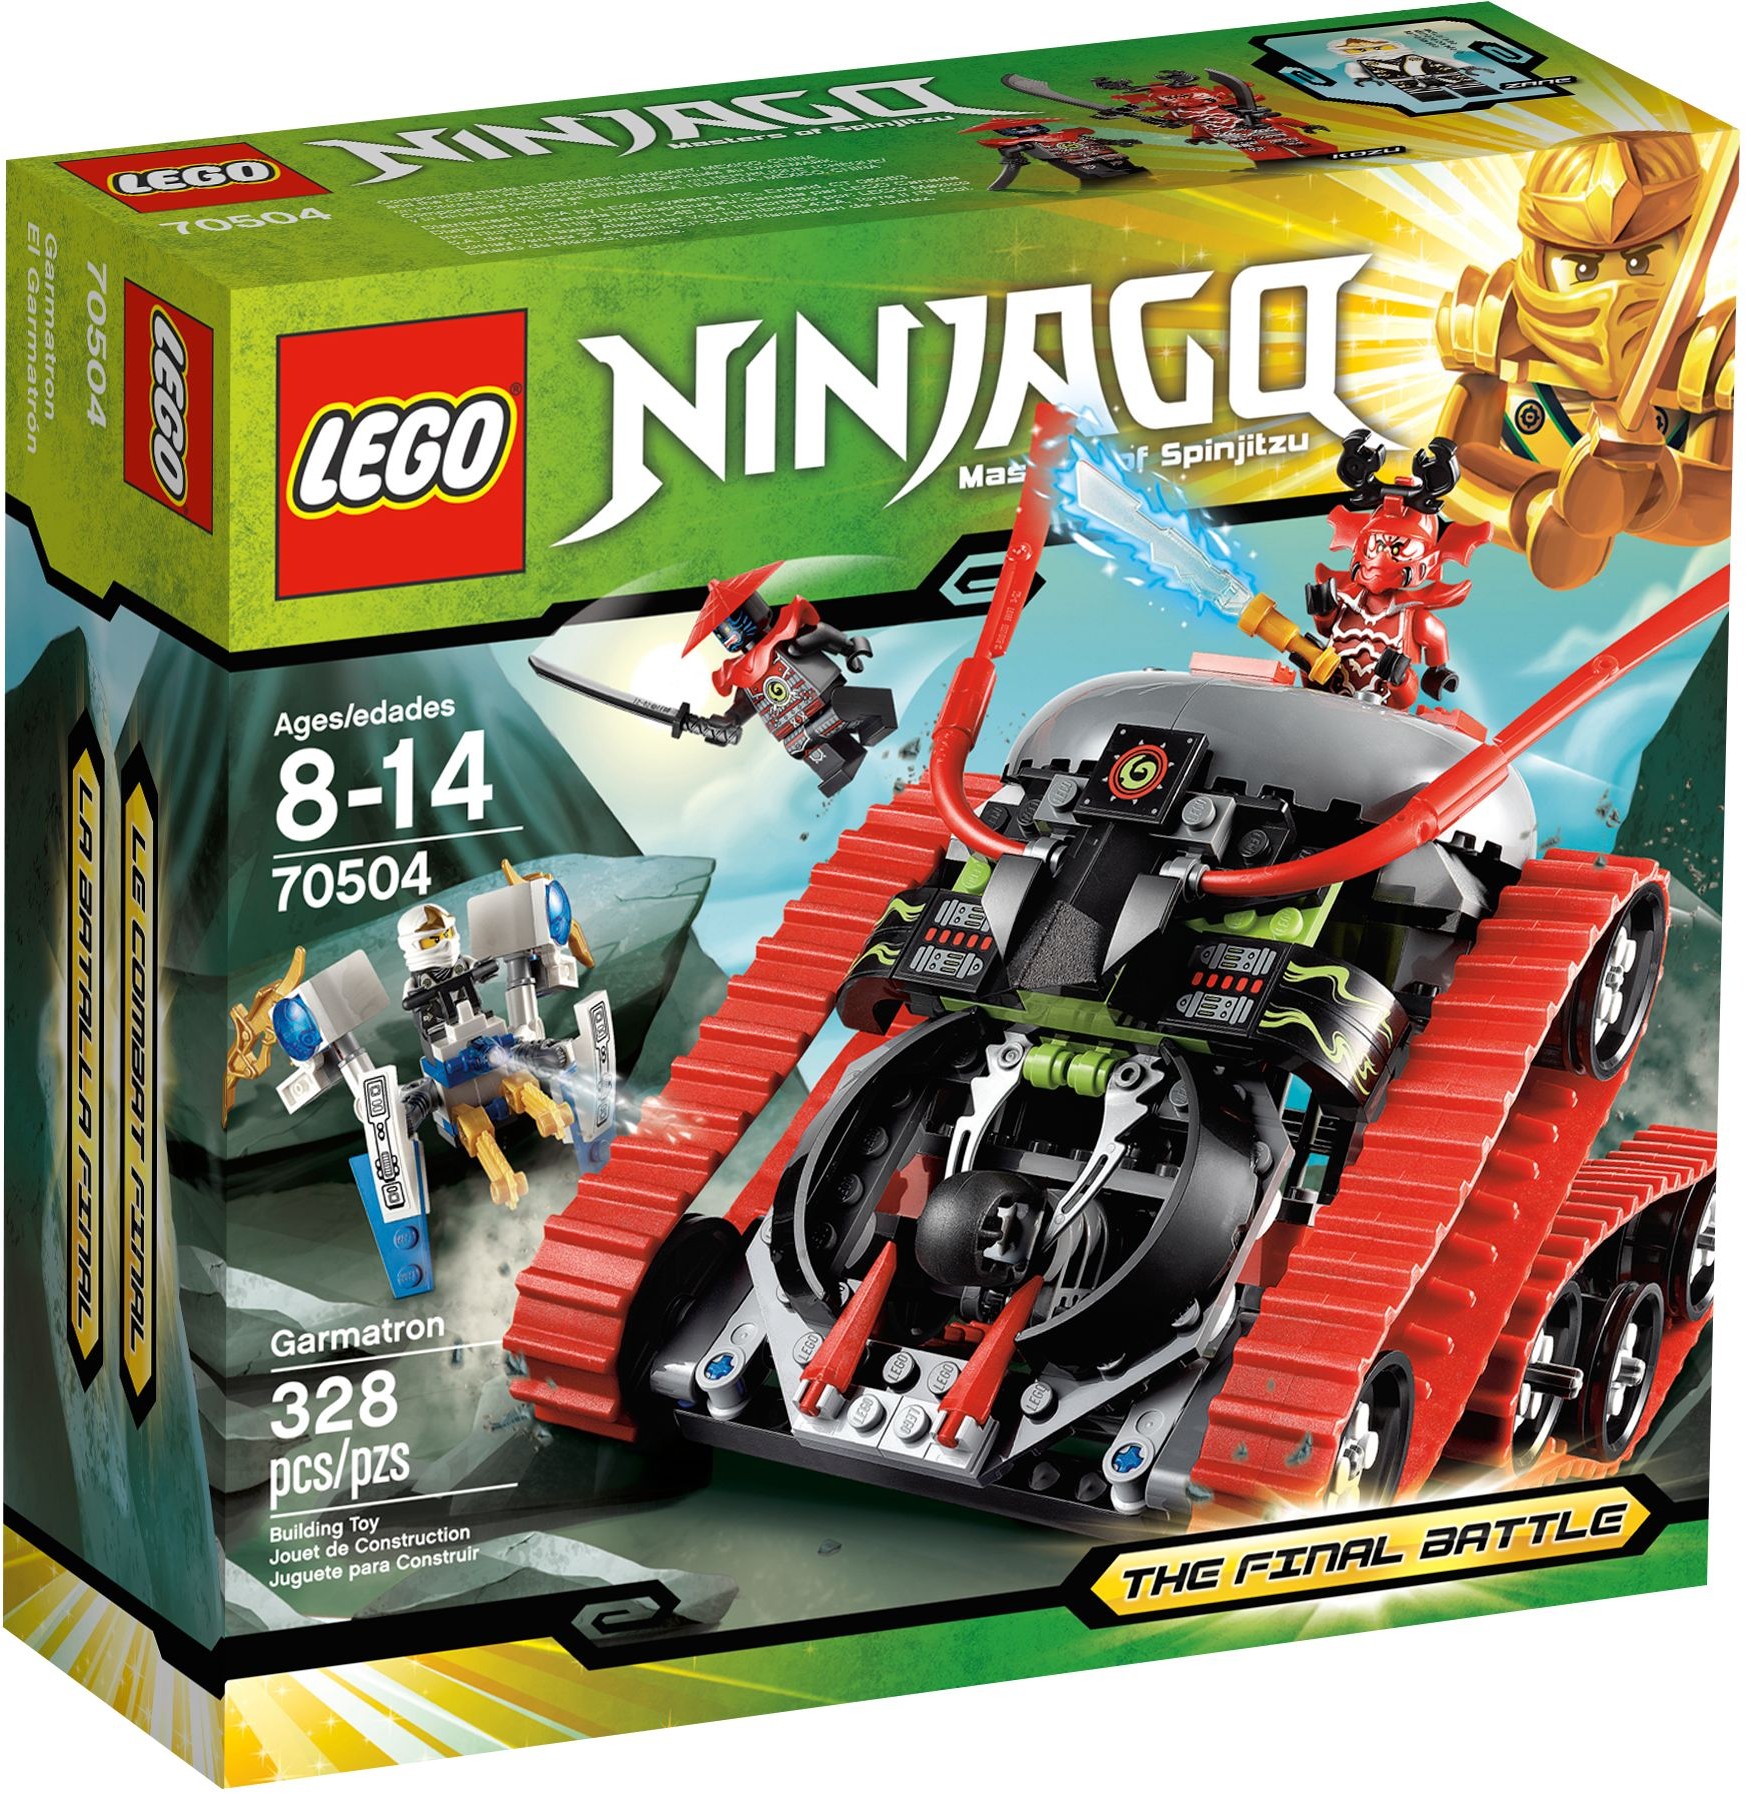 tung Gum Downtown Lego 70504 Garmatron - Lego Ninjago set for sale best price